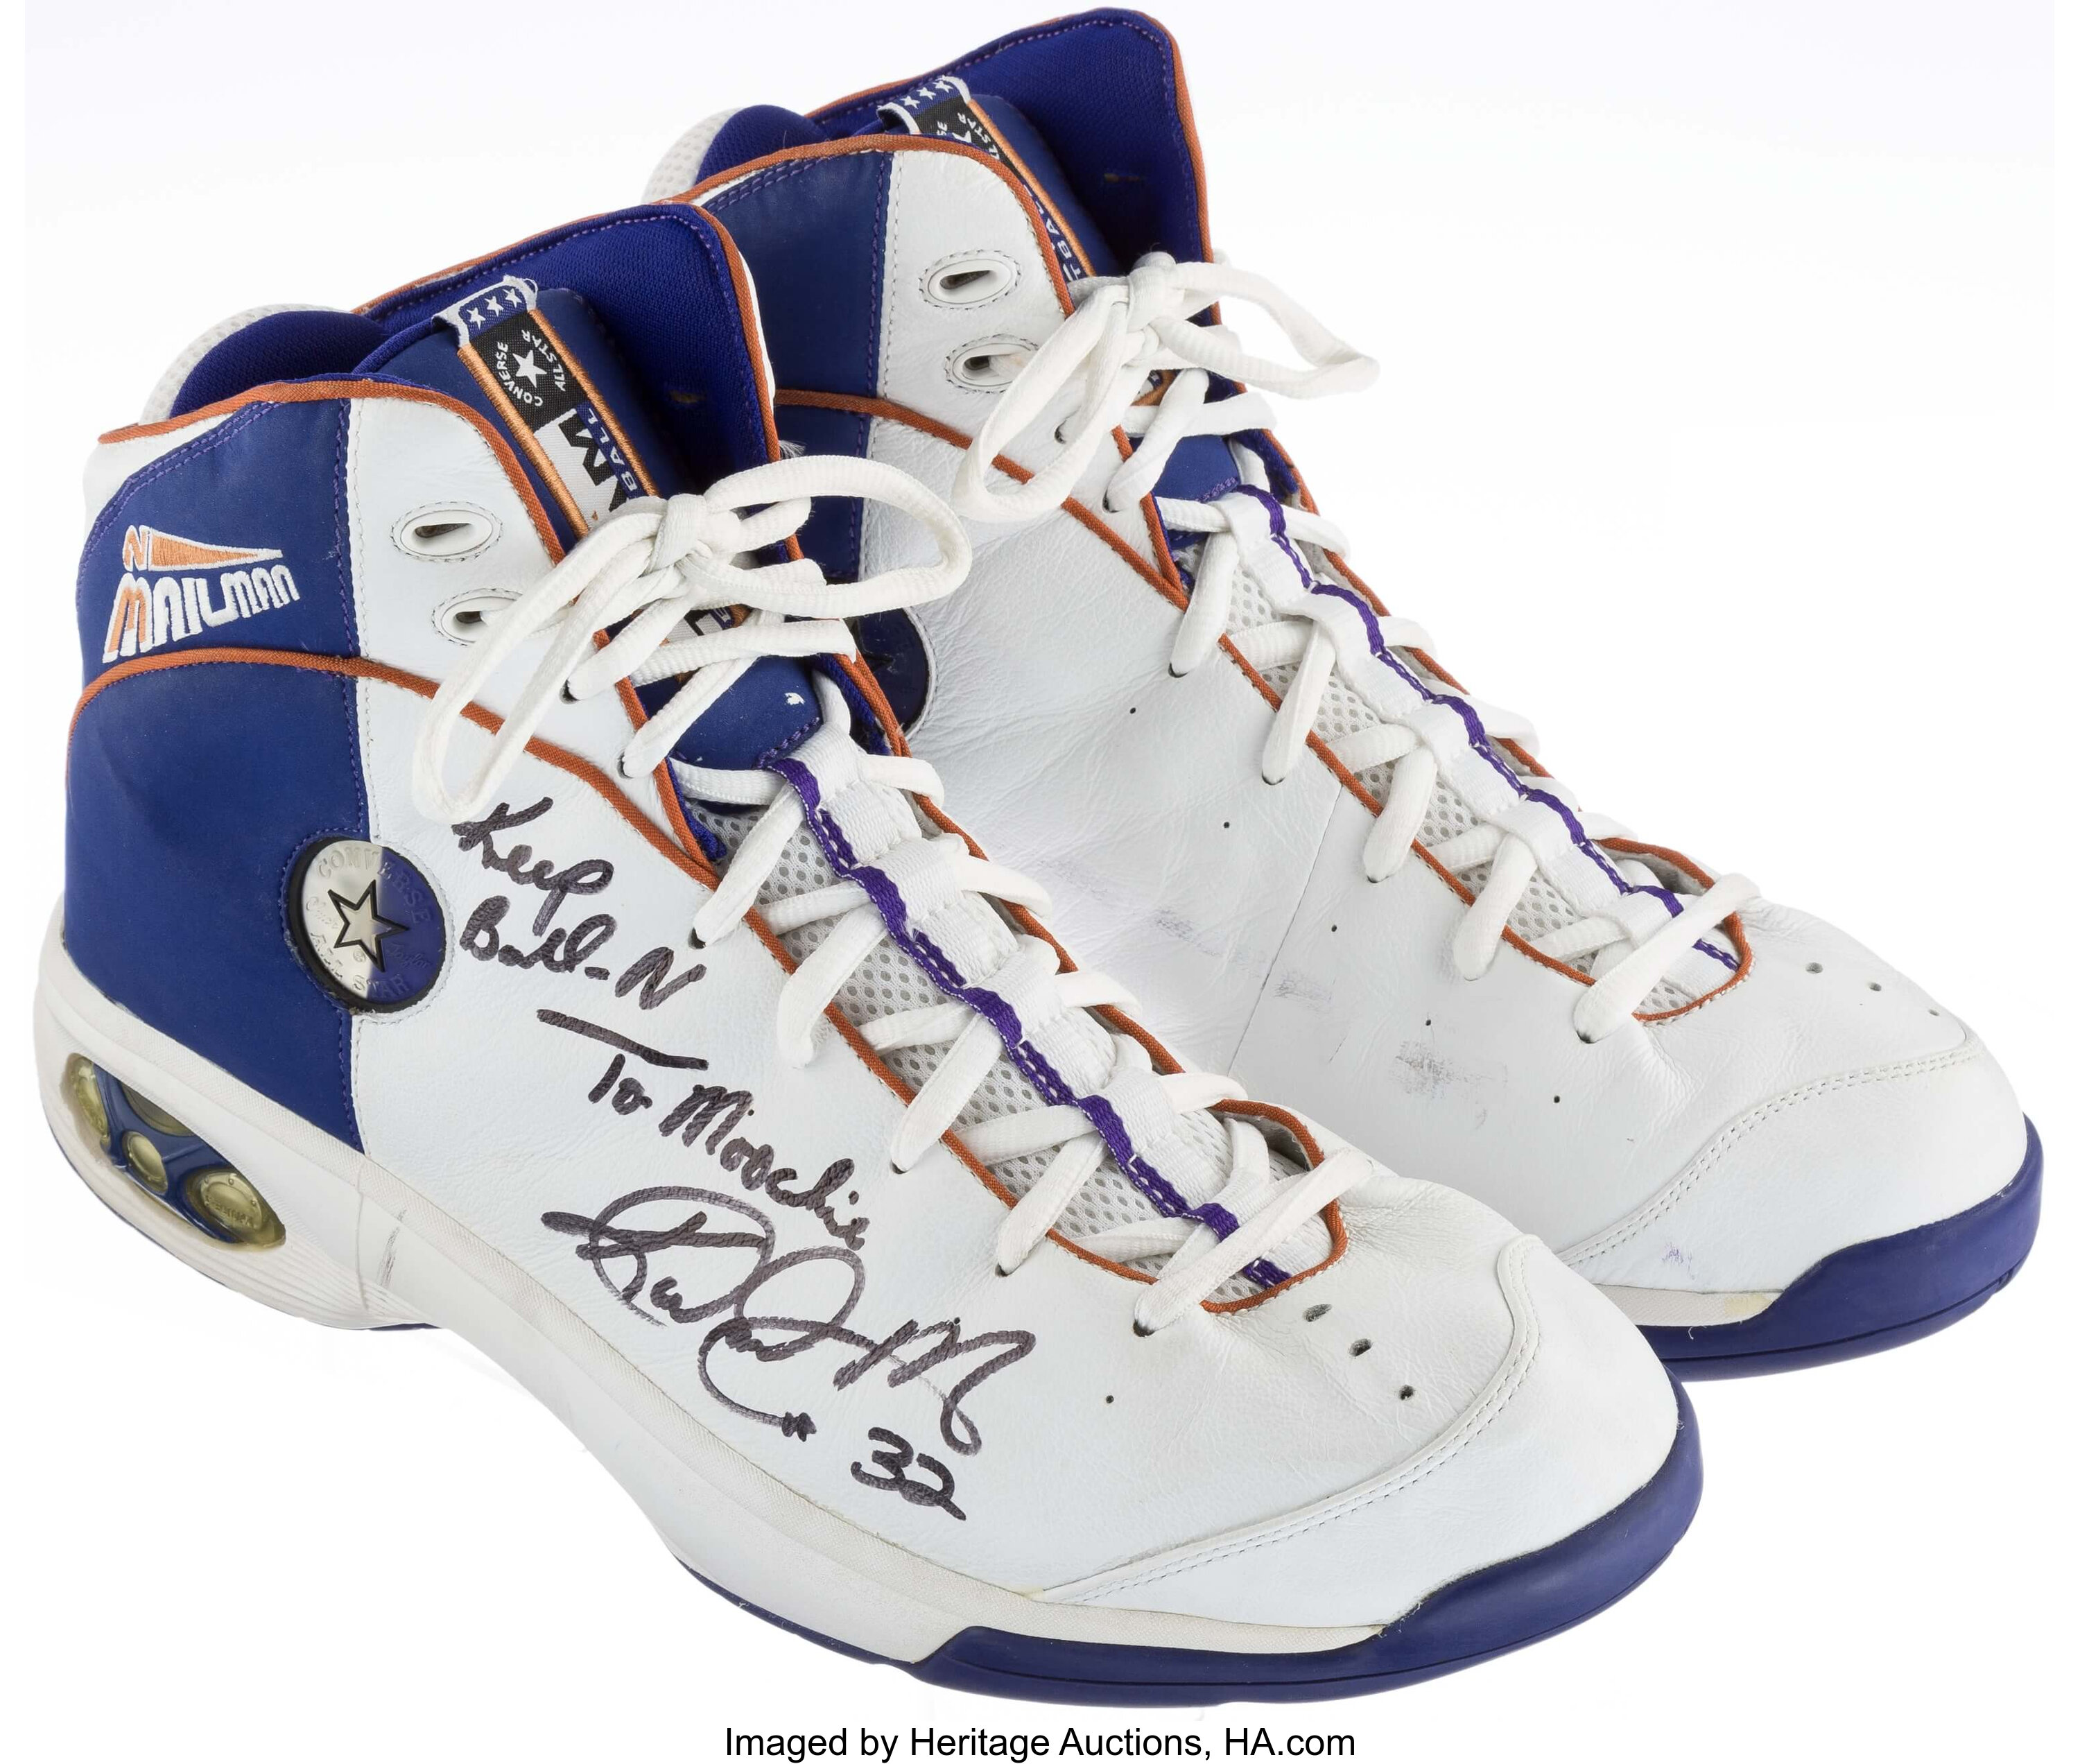 2001 Karl Malone Game Worn, Signed Utah Jazz Sneakers.... | Lot #41193 |  Heritage Auctions